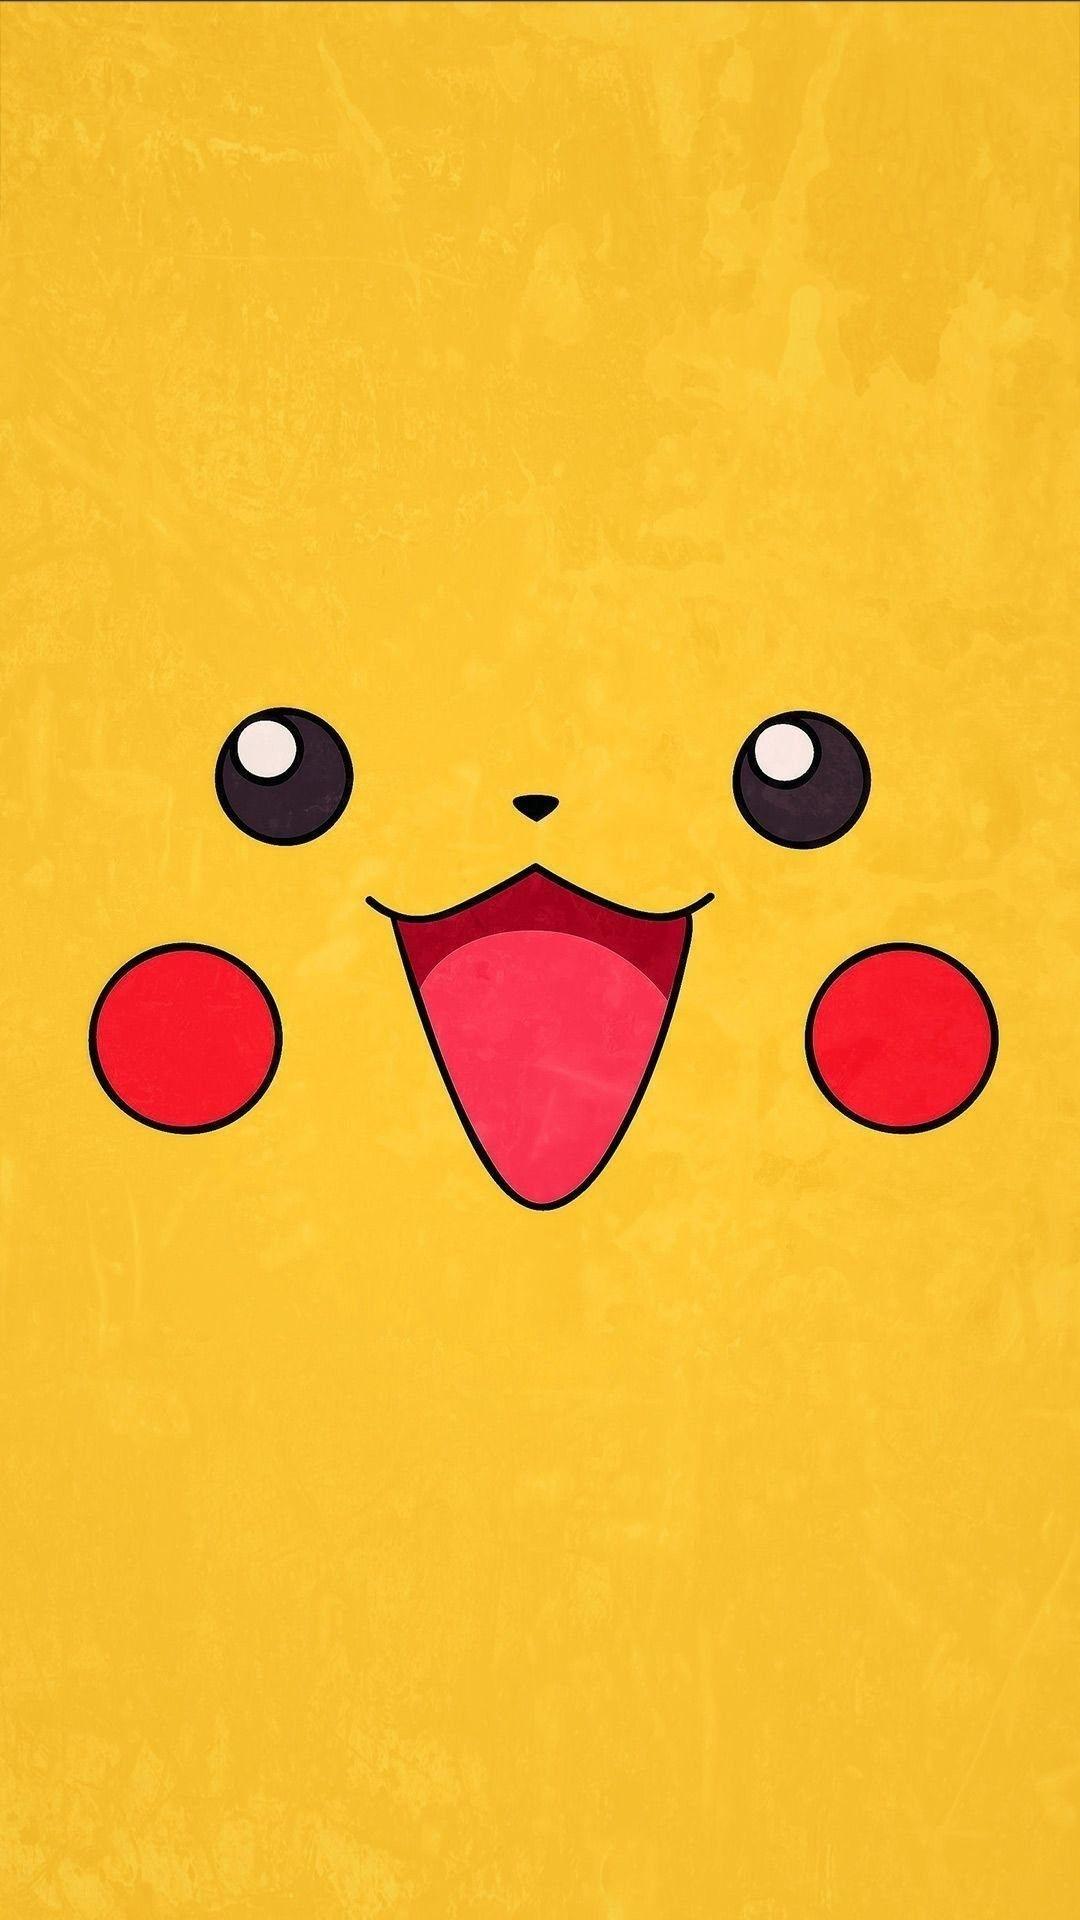 Pikachu Pokemon Anime #iPhone #6 #plus #wallpaper